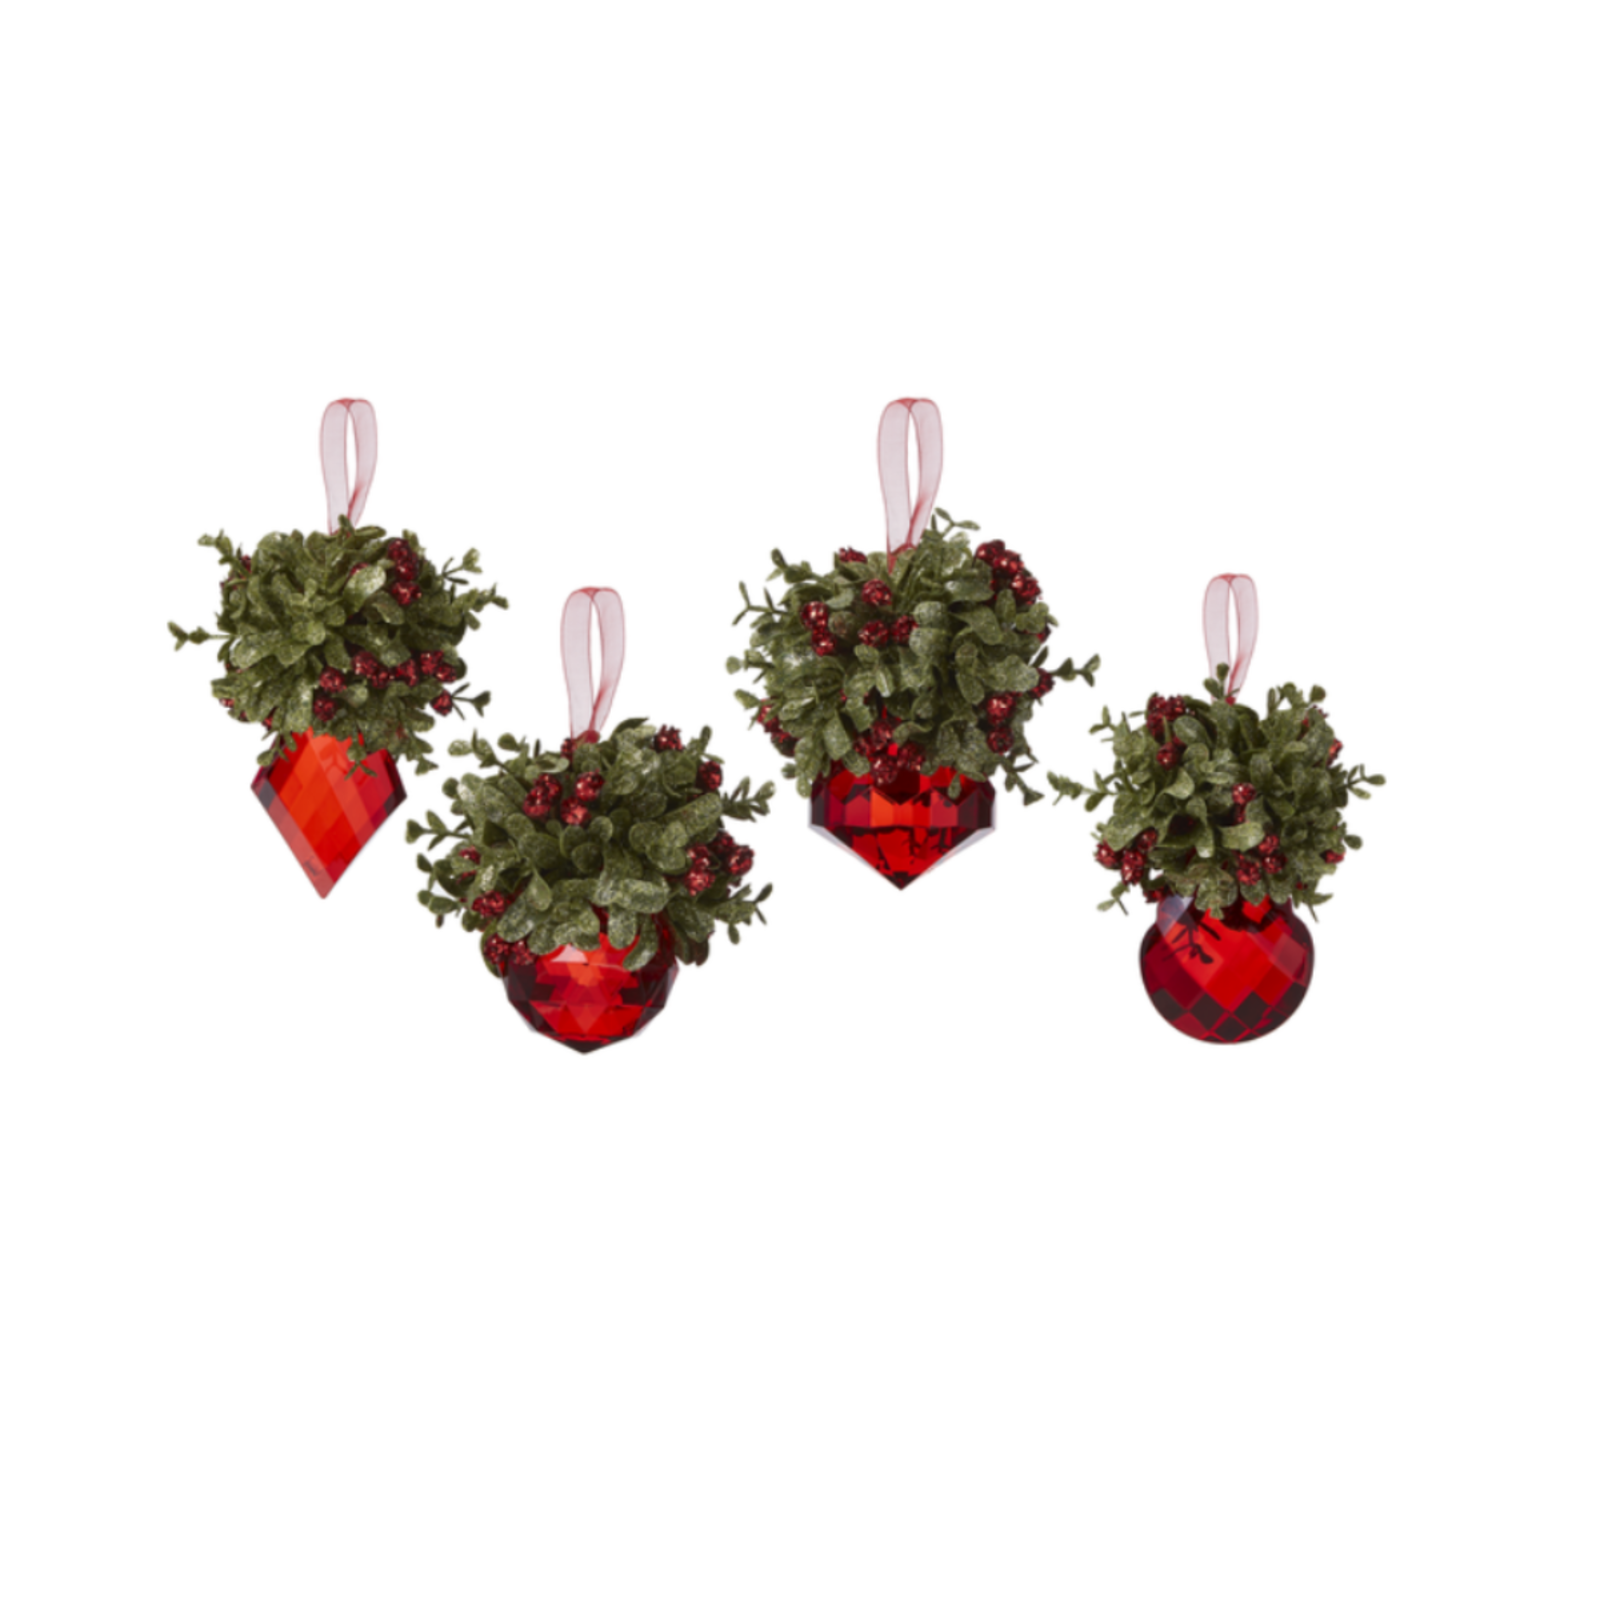 Ganz Red Jewel Mistletoe Ornament     KK506 loading=